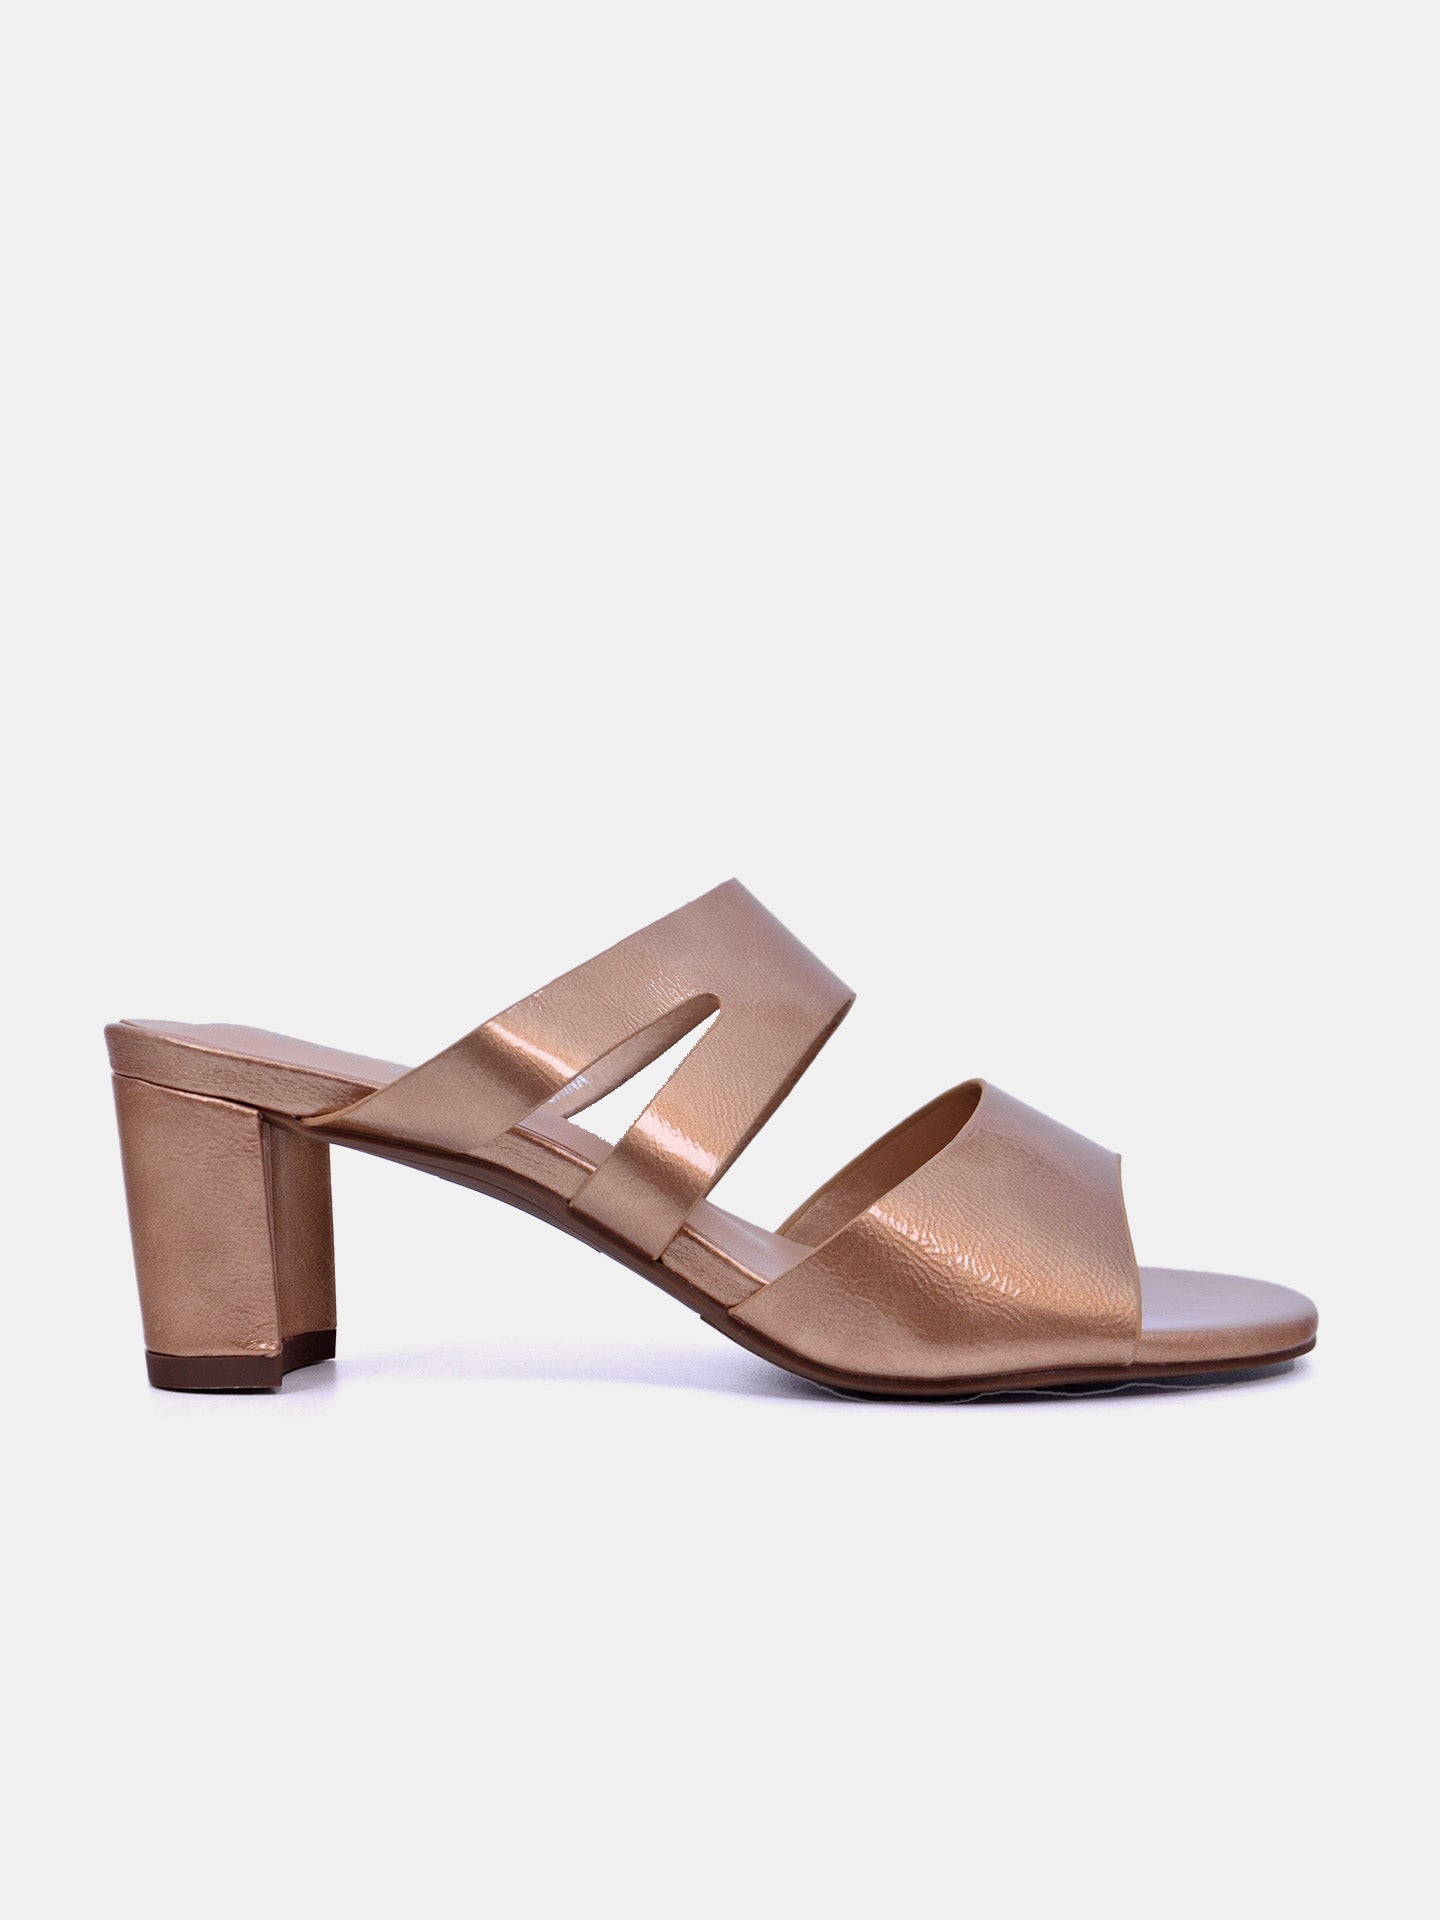 Michelle Morgan 214RC19M Women's Heeled Sandals #color_Gold